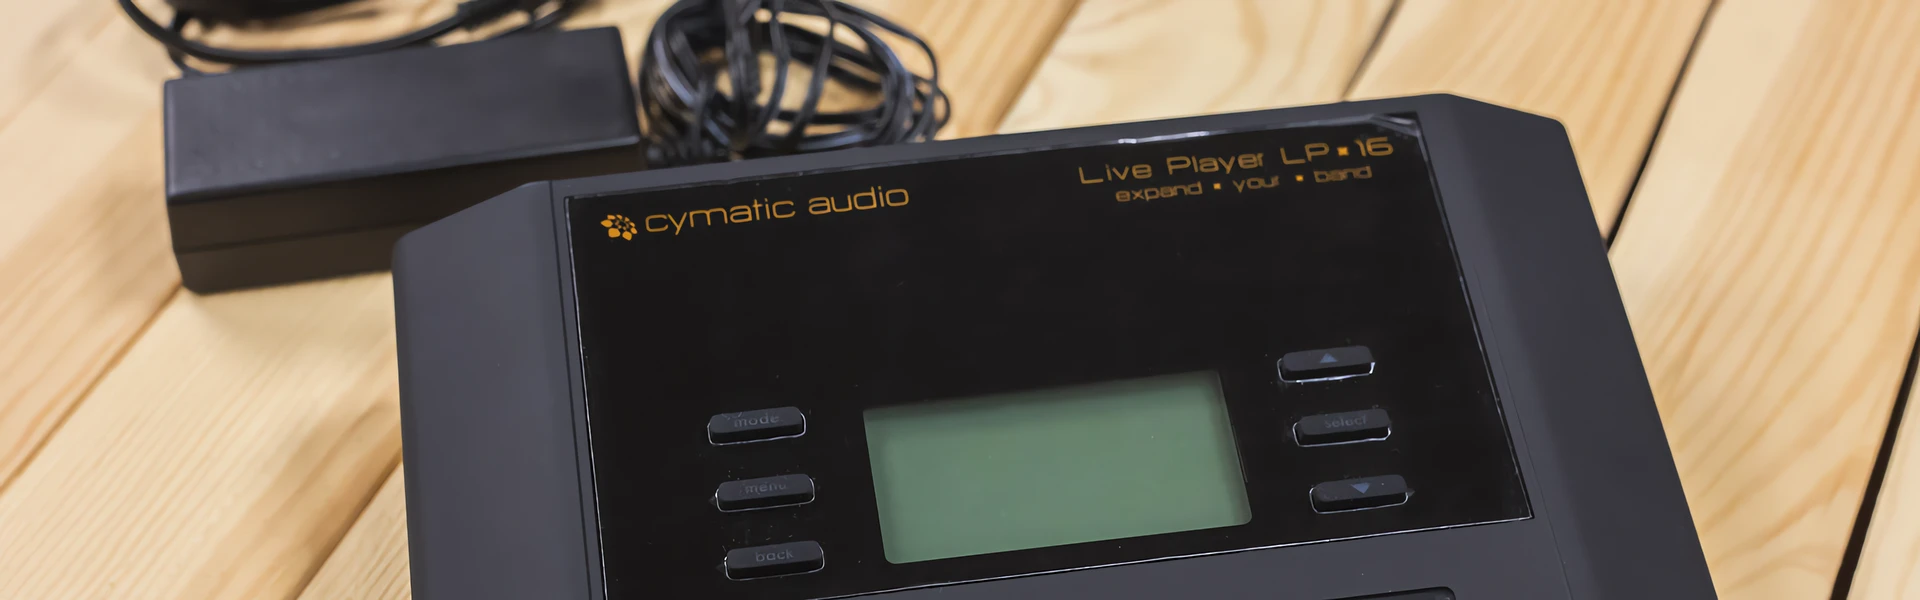 Test interfejsu Cymatic Audio Live Player LP 16